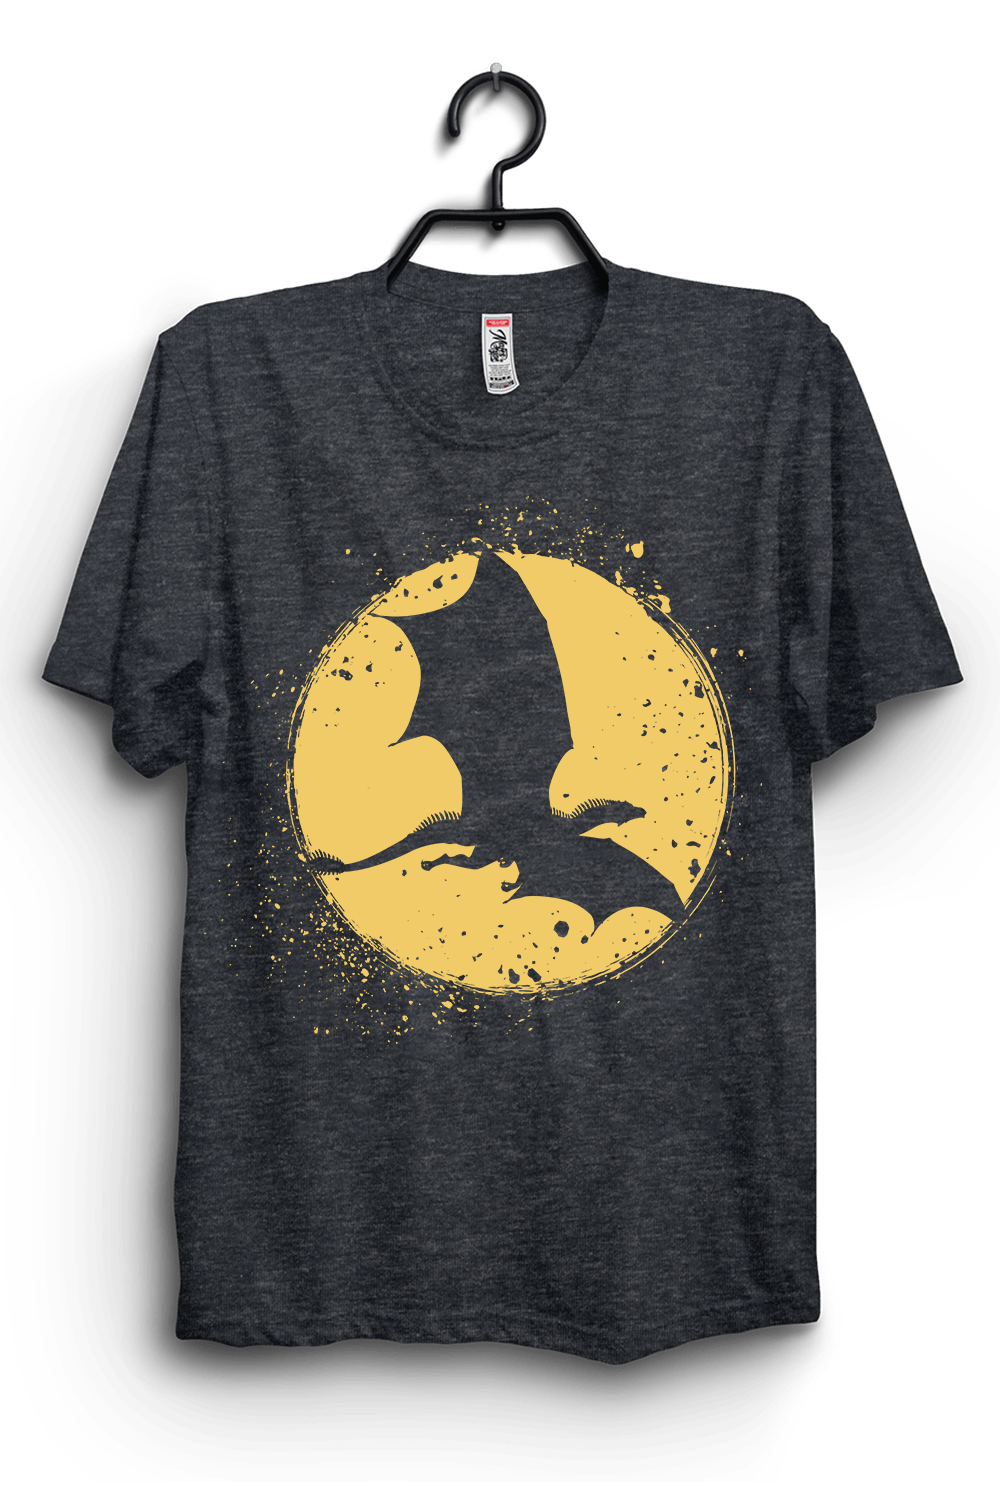 Flying Dinosaur Illustration SVG t-shirt Design pinterest preview image.